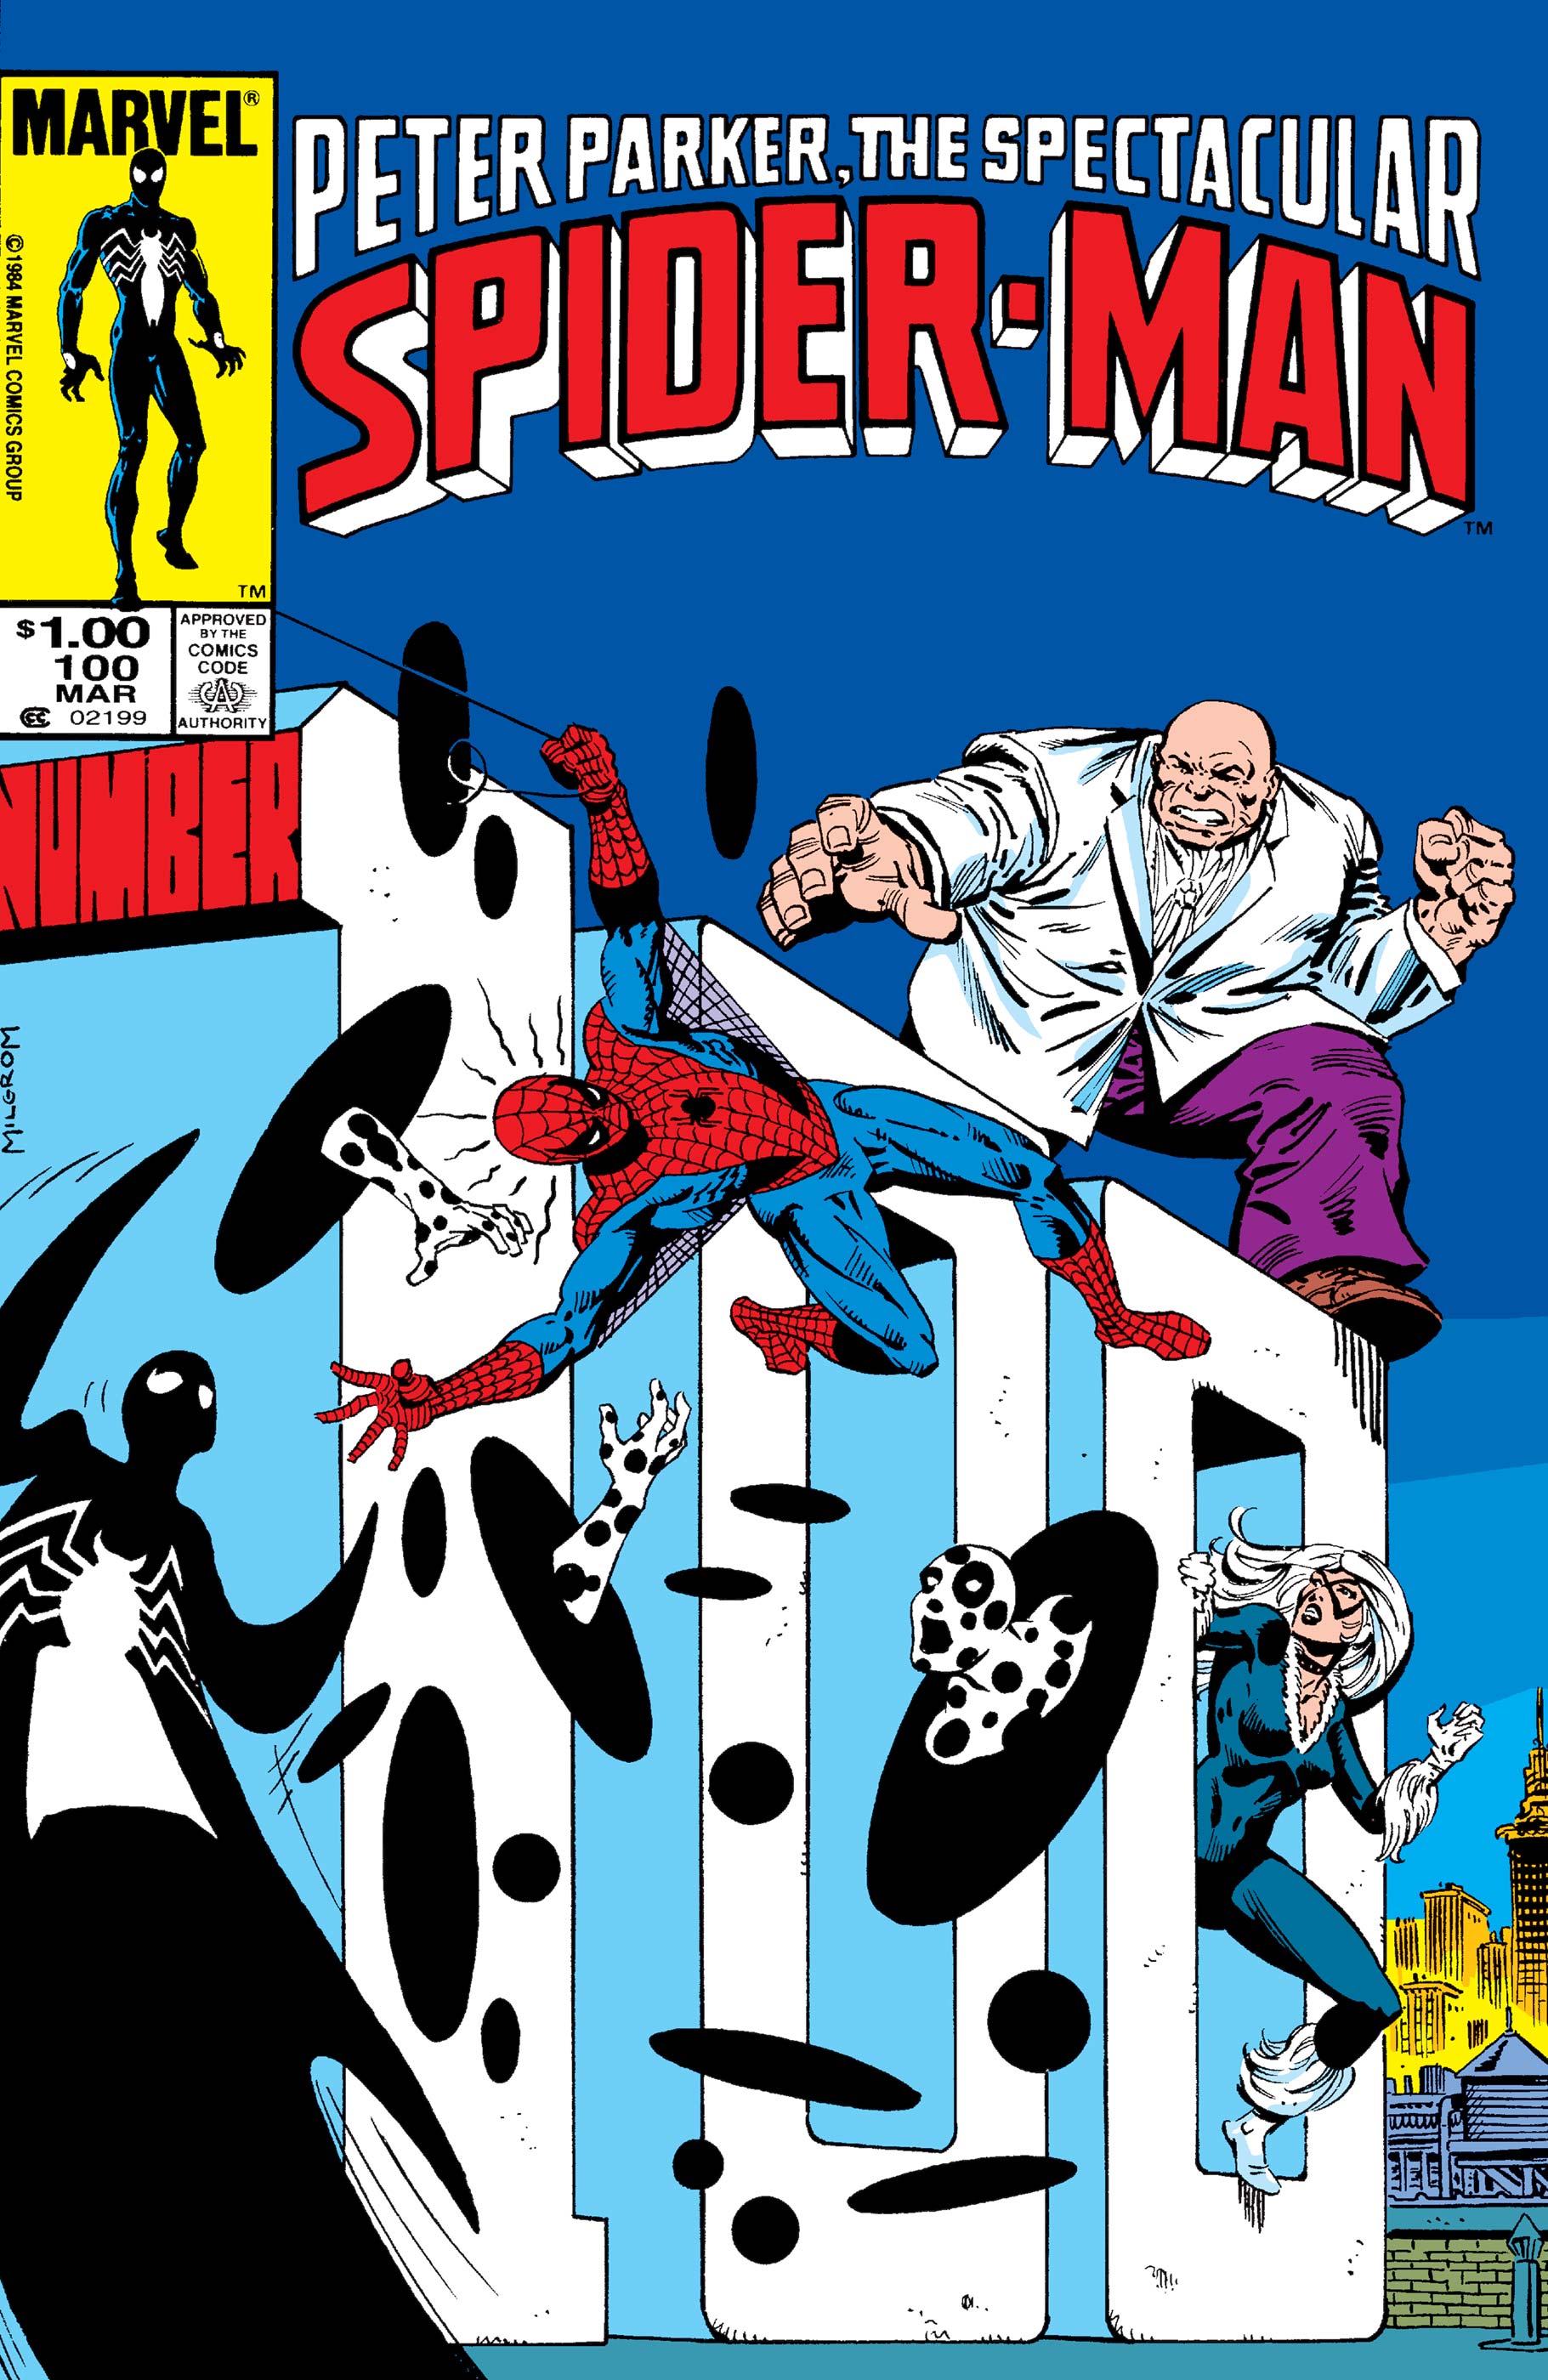 Peter Parker, the Spectacular Spider-Man (1976) #100